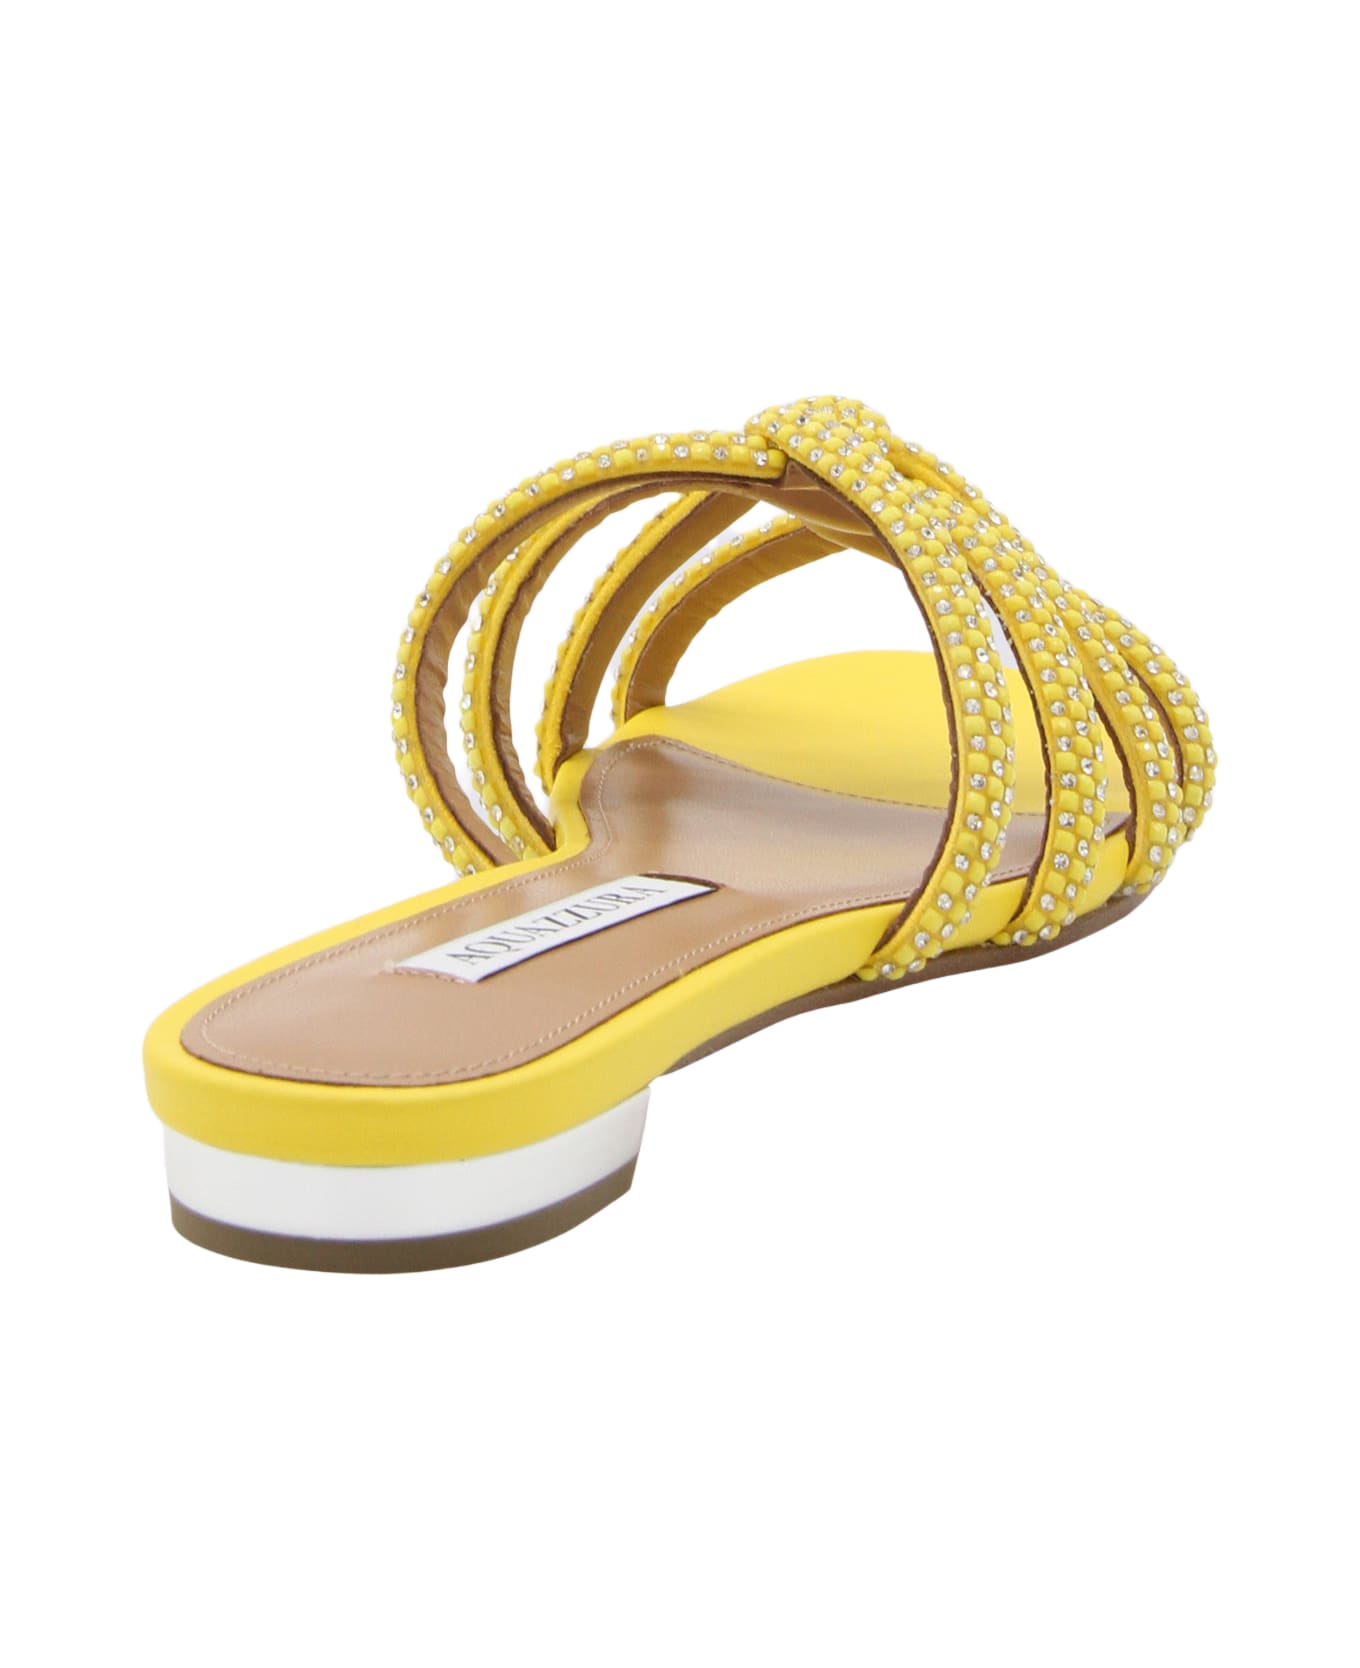 Aquazzura Yellow Leather Sandals - CITRON